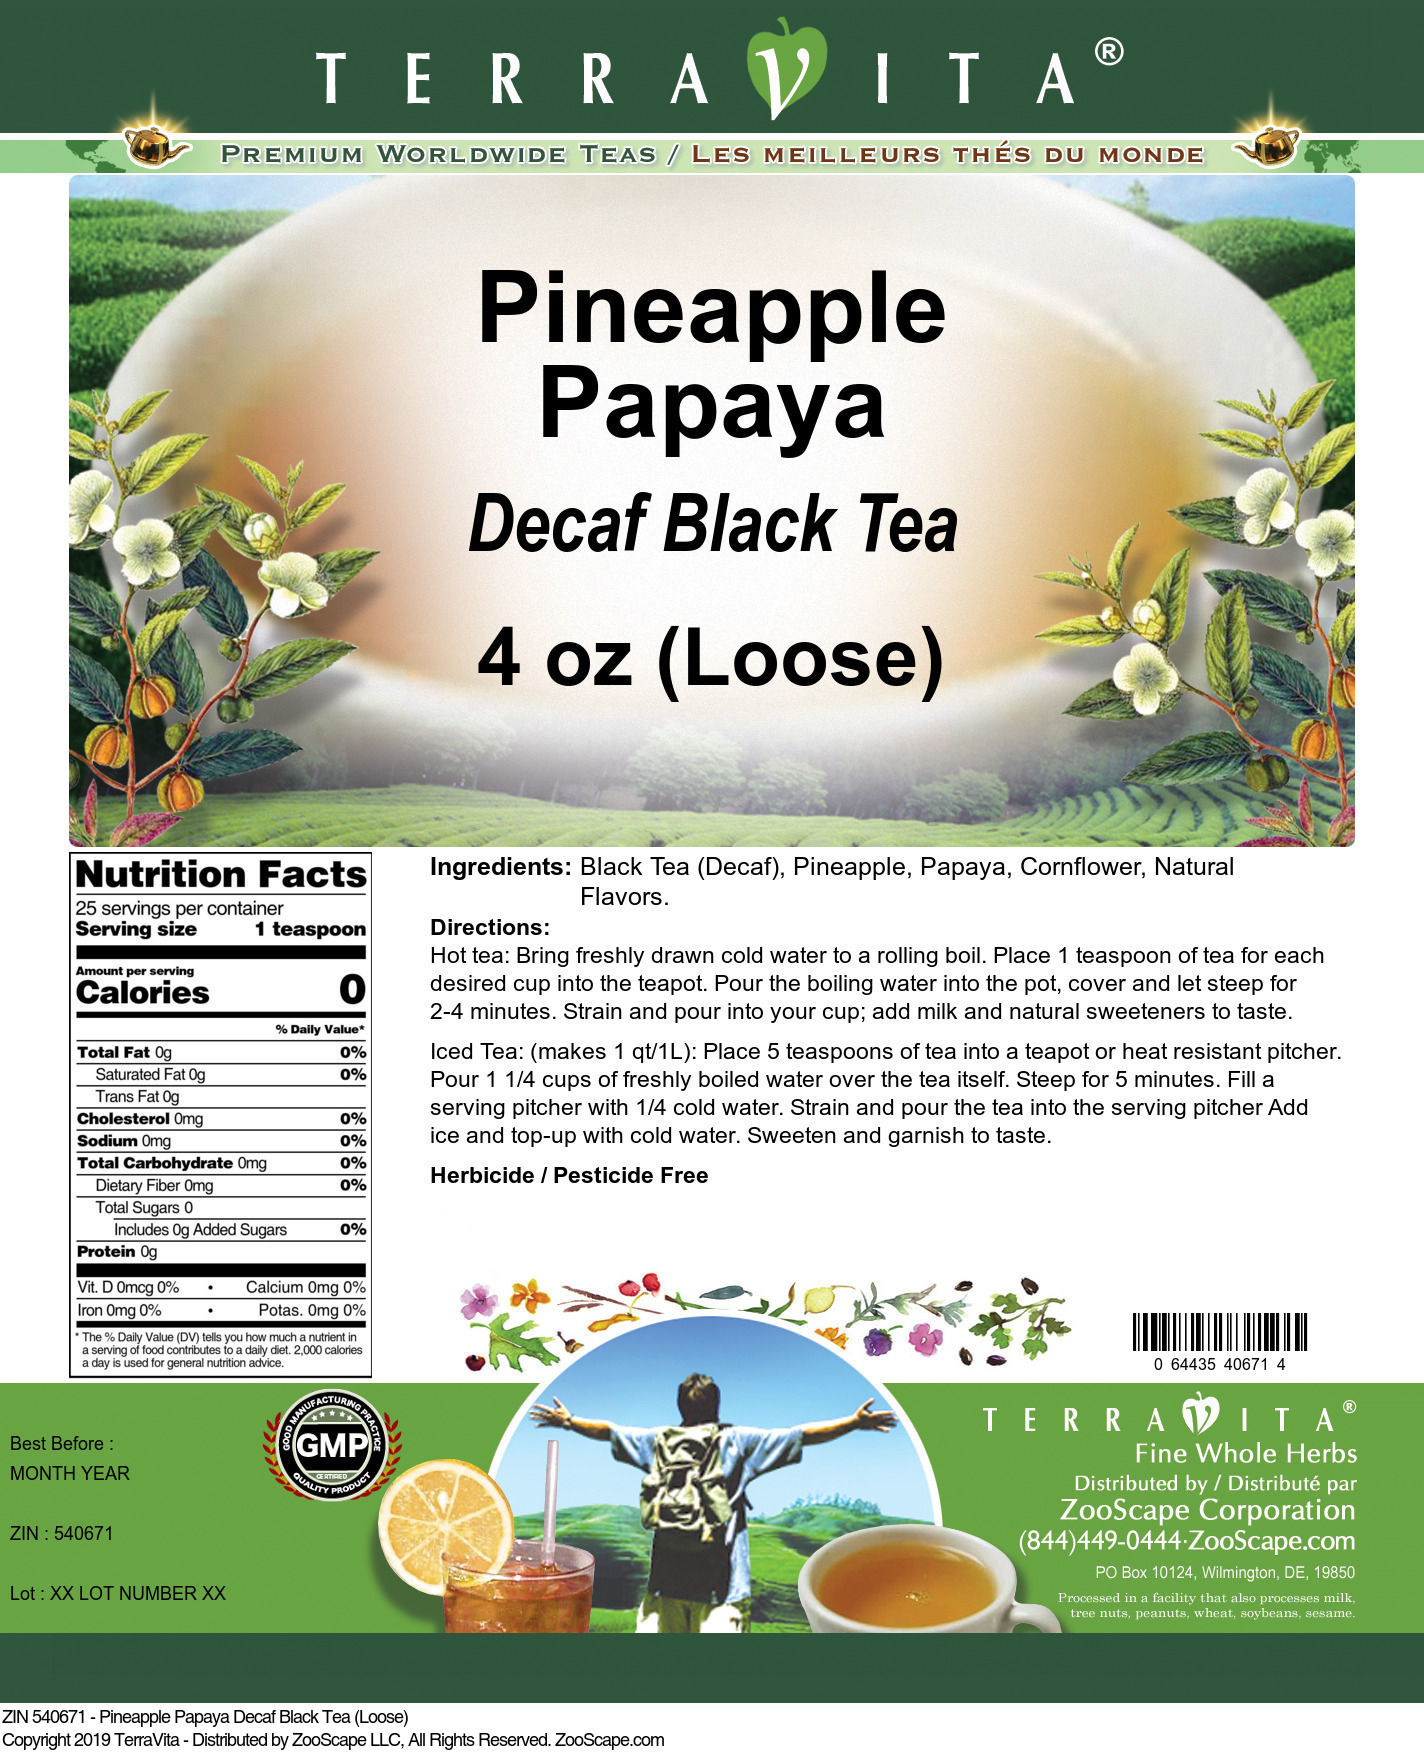 Pineapple Papaya Decaf Black Tea (Loose) - Label